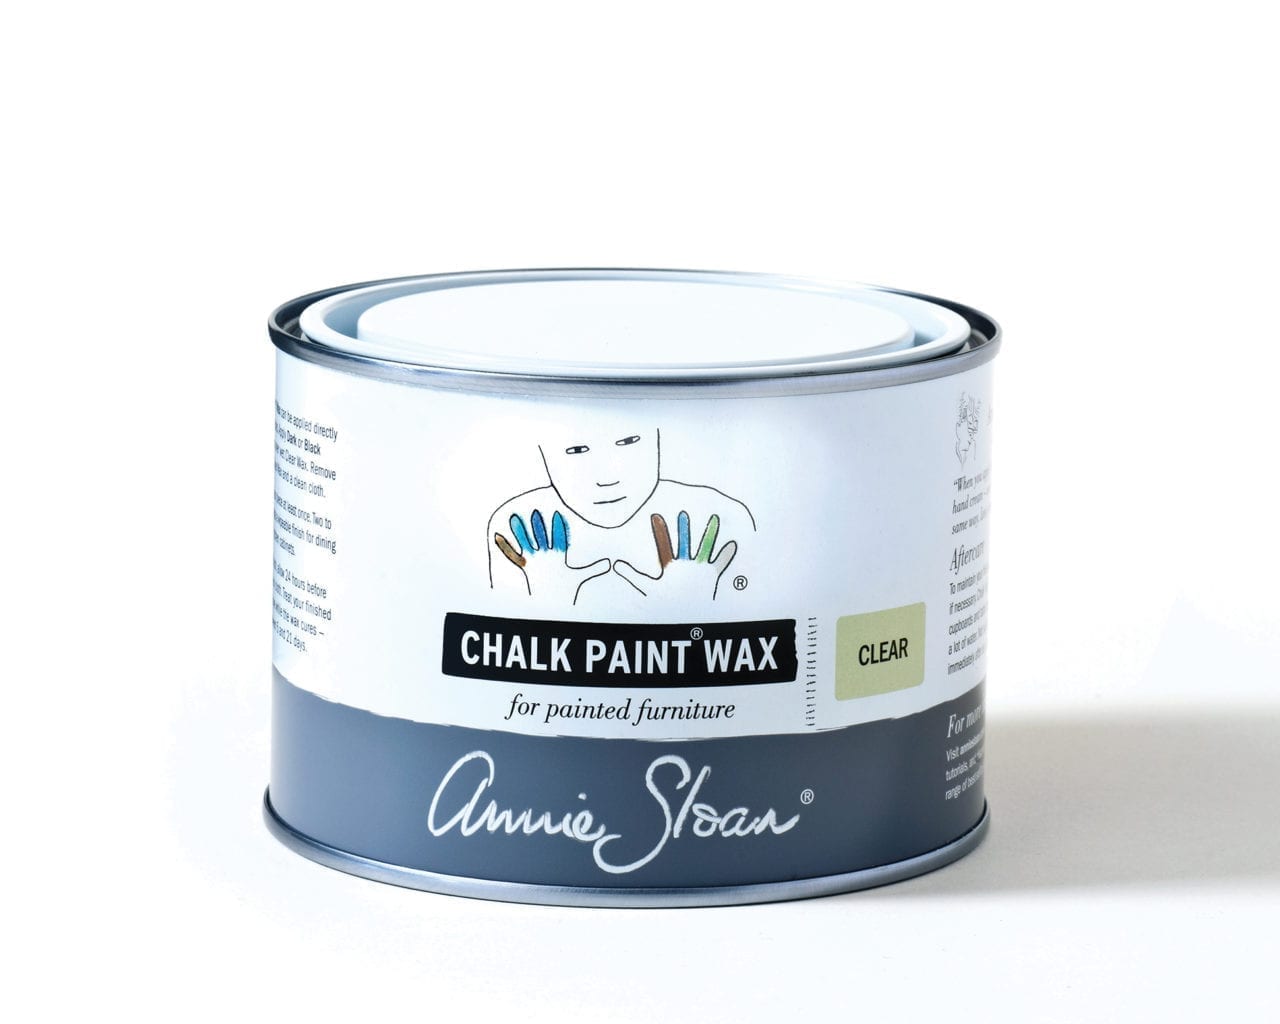 500ml tin of Clear Chalk Paint® Wax by Annie Sloan